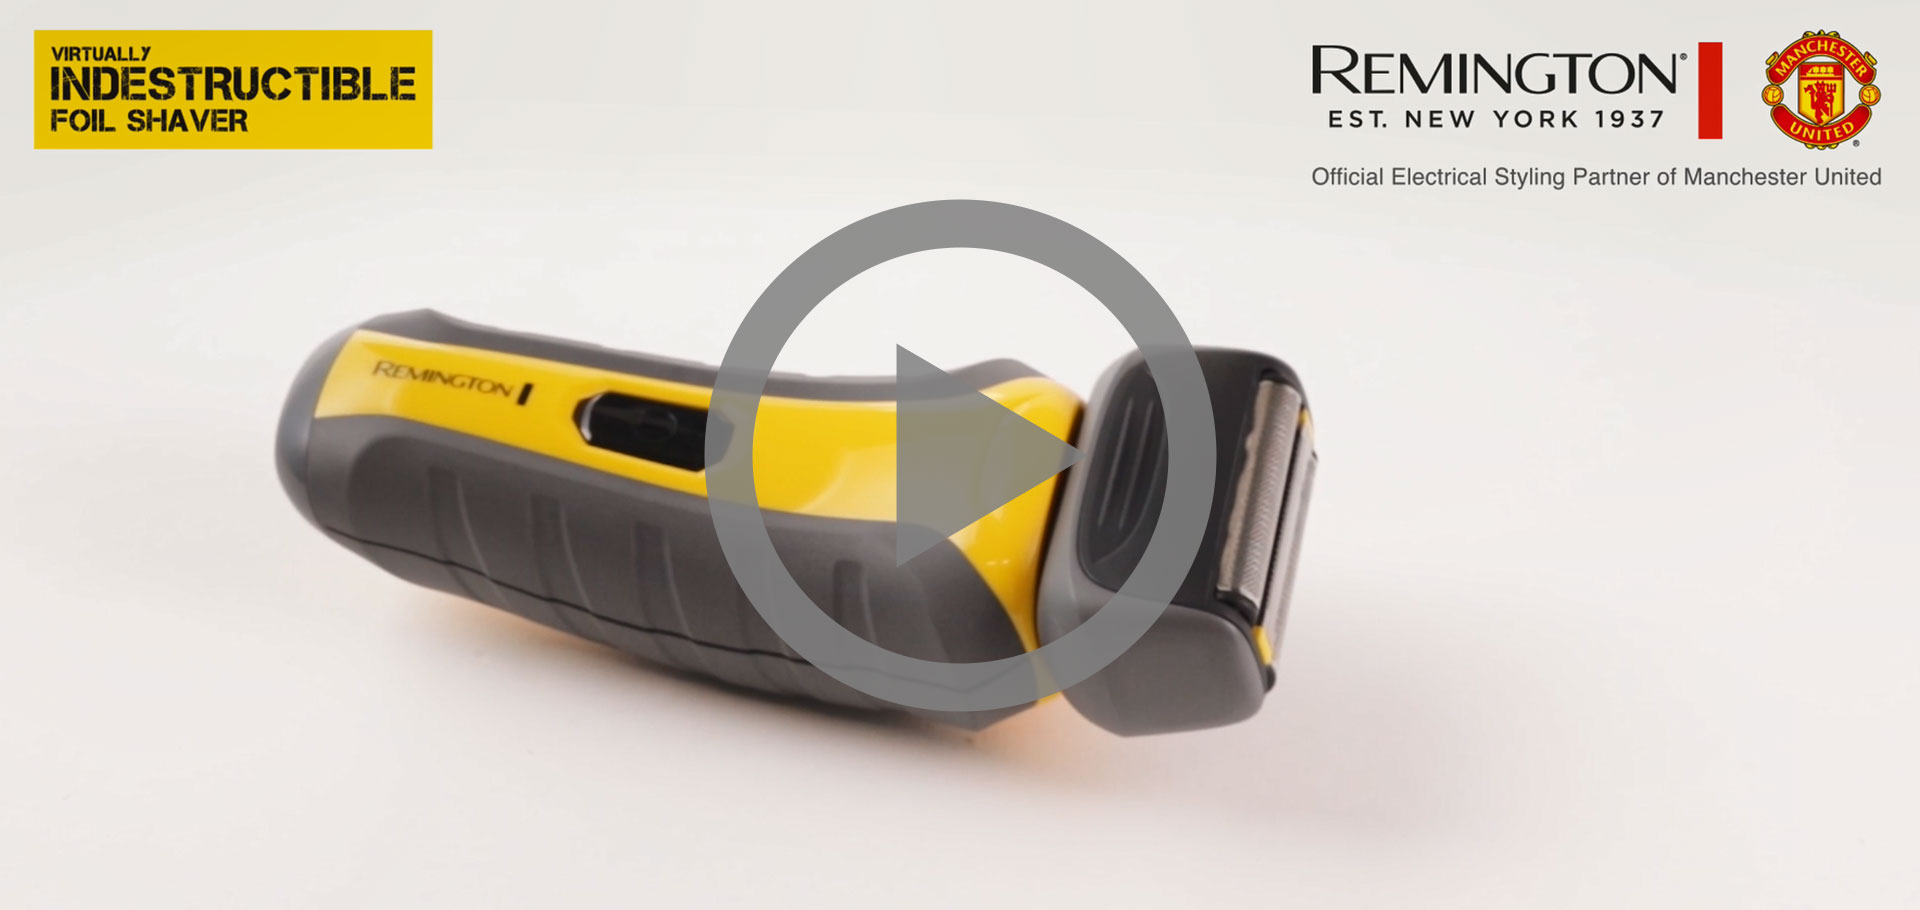 Remington Virtually Indestructible Foil Shaver |